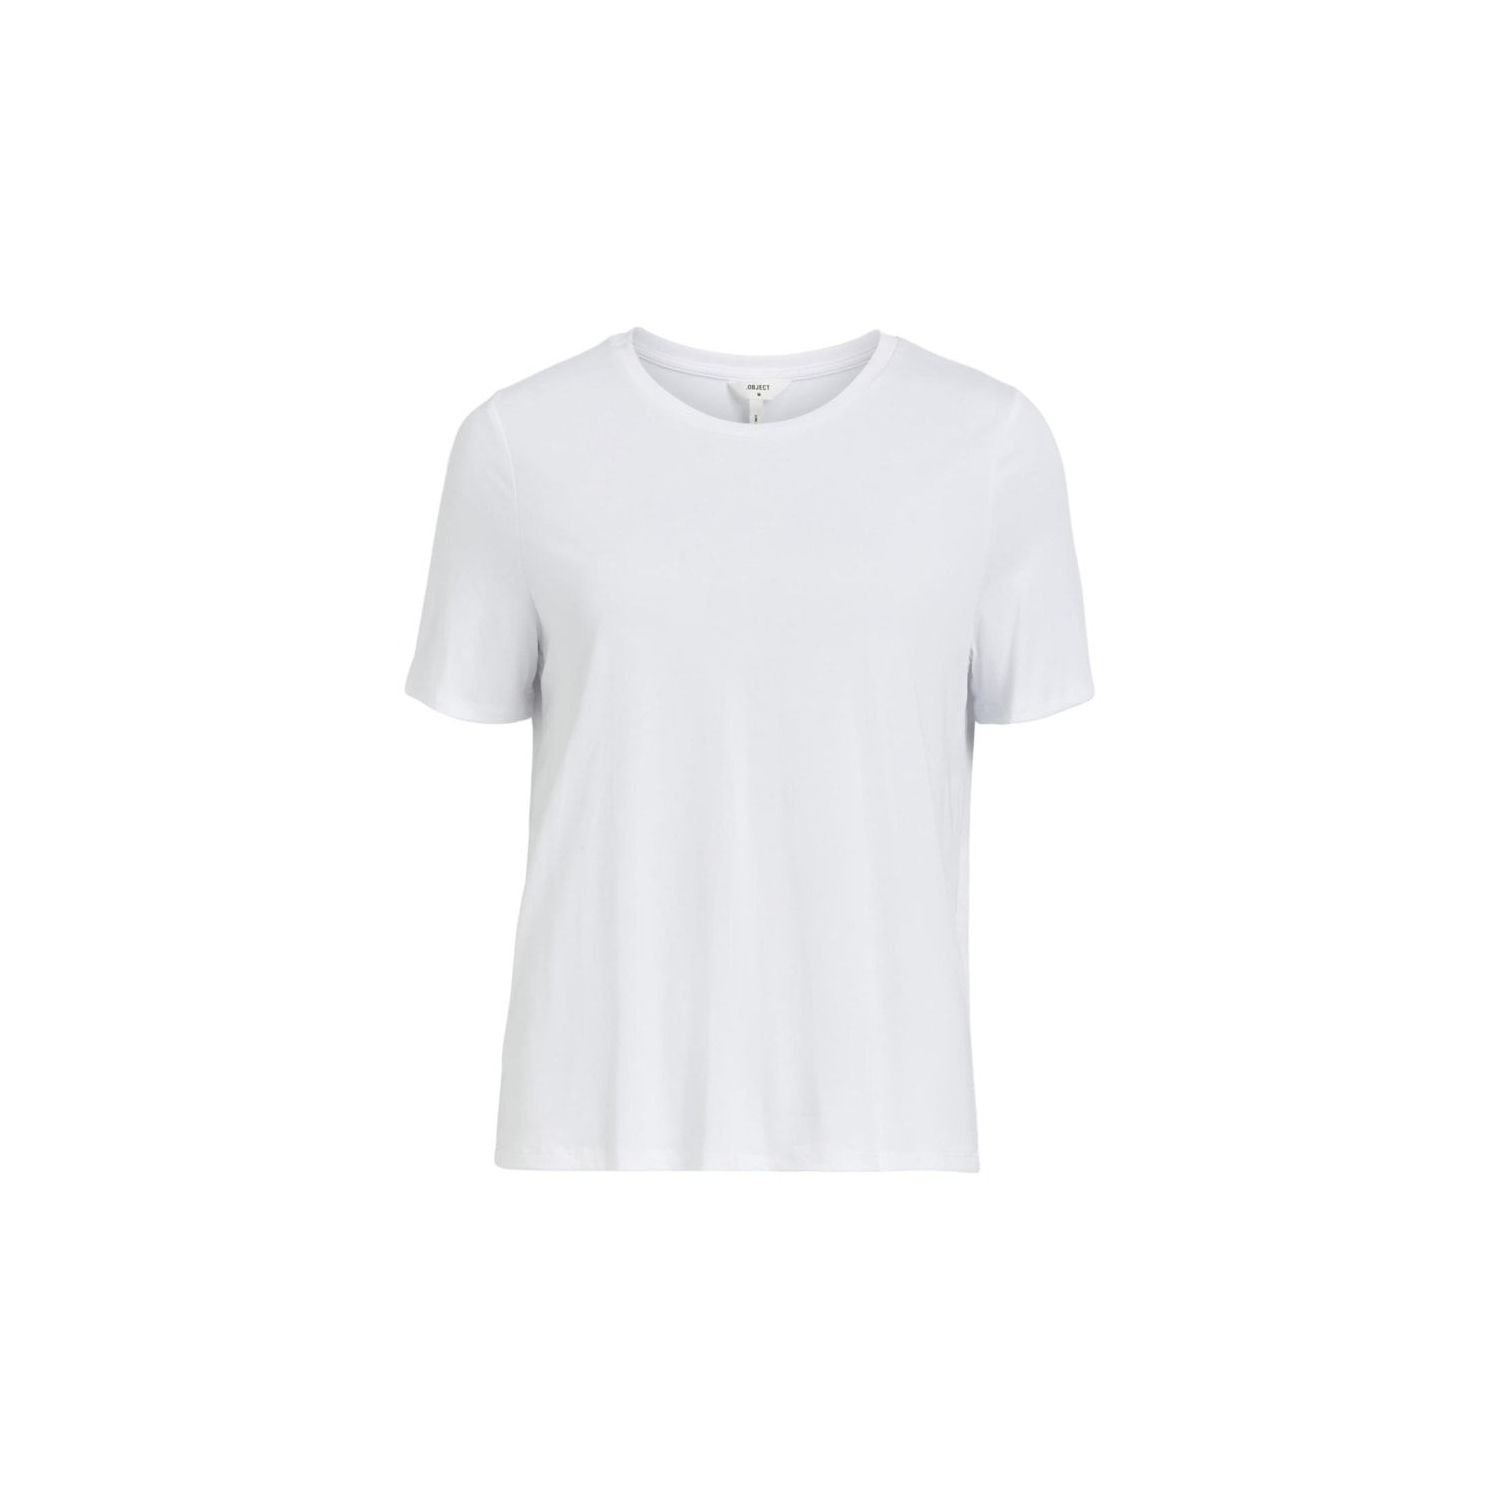 Object objannie s/s t-shirt noos white